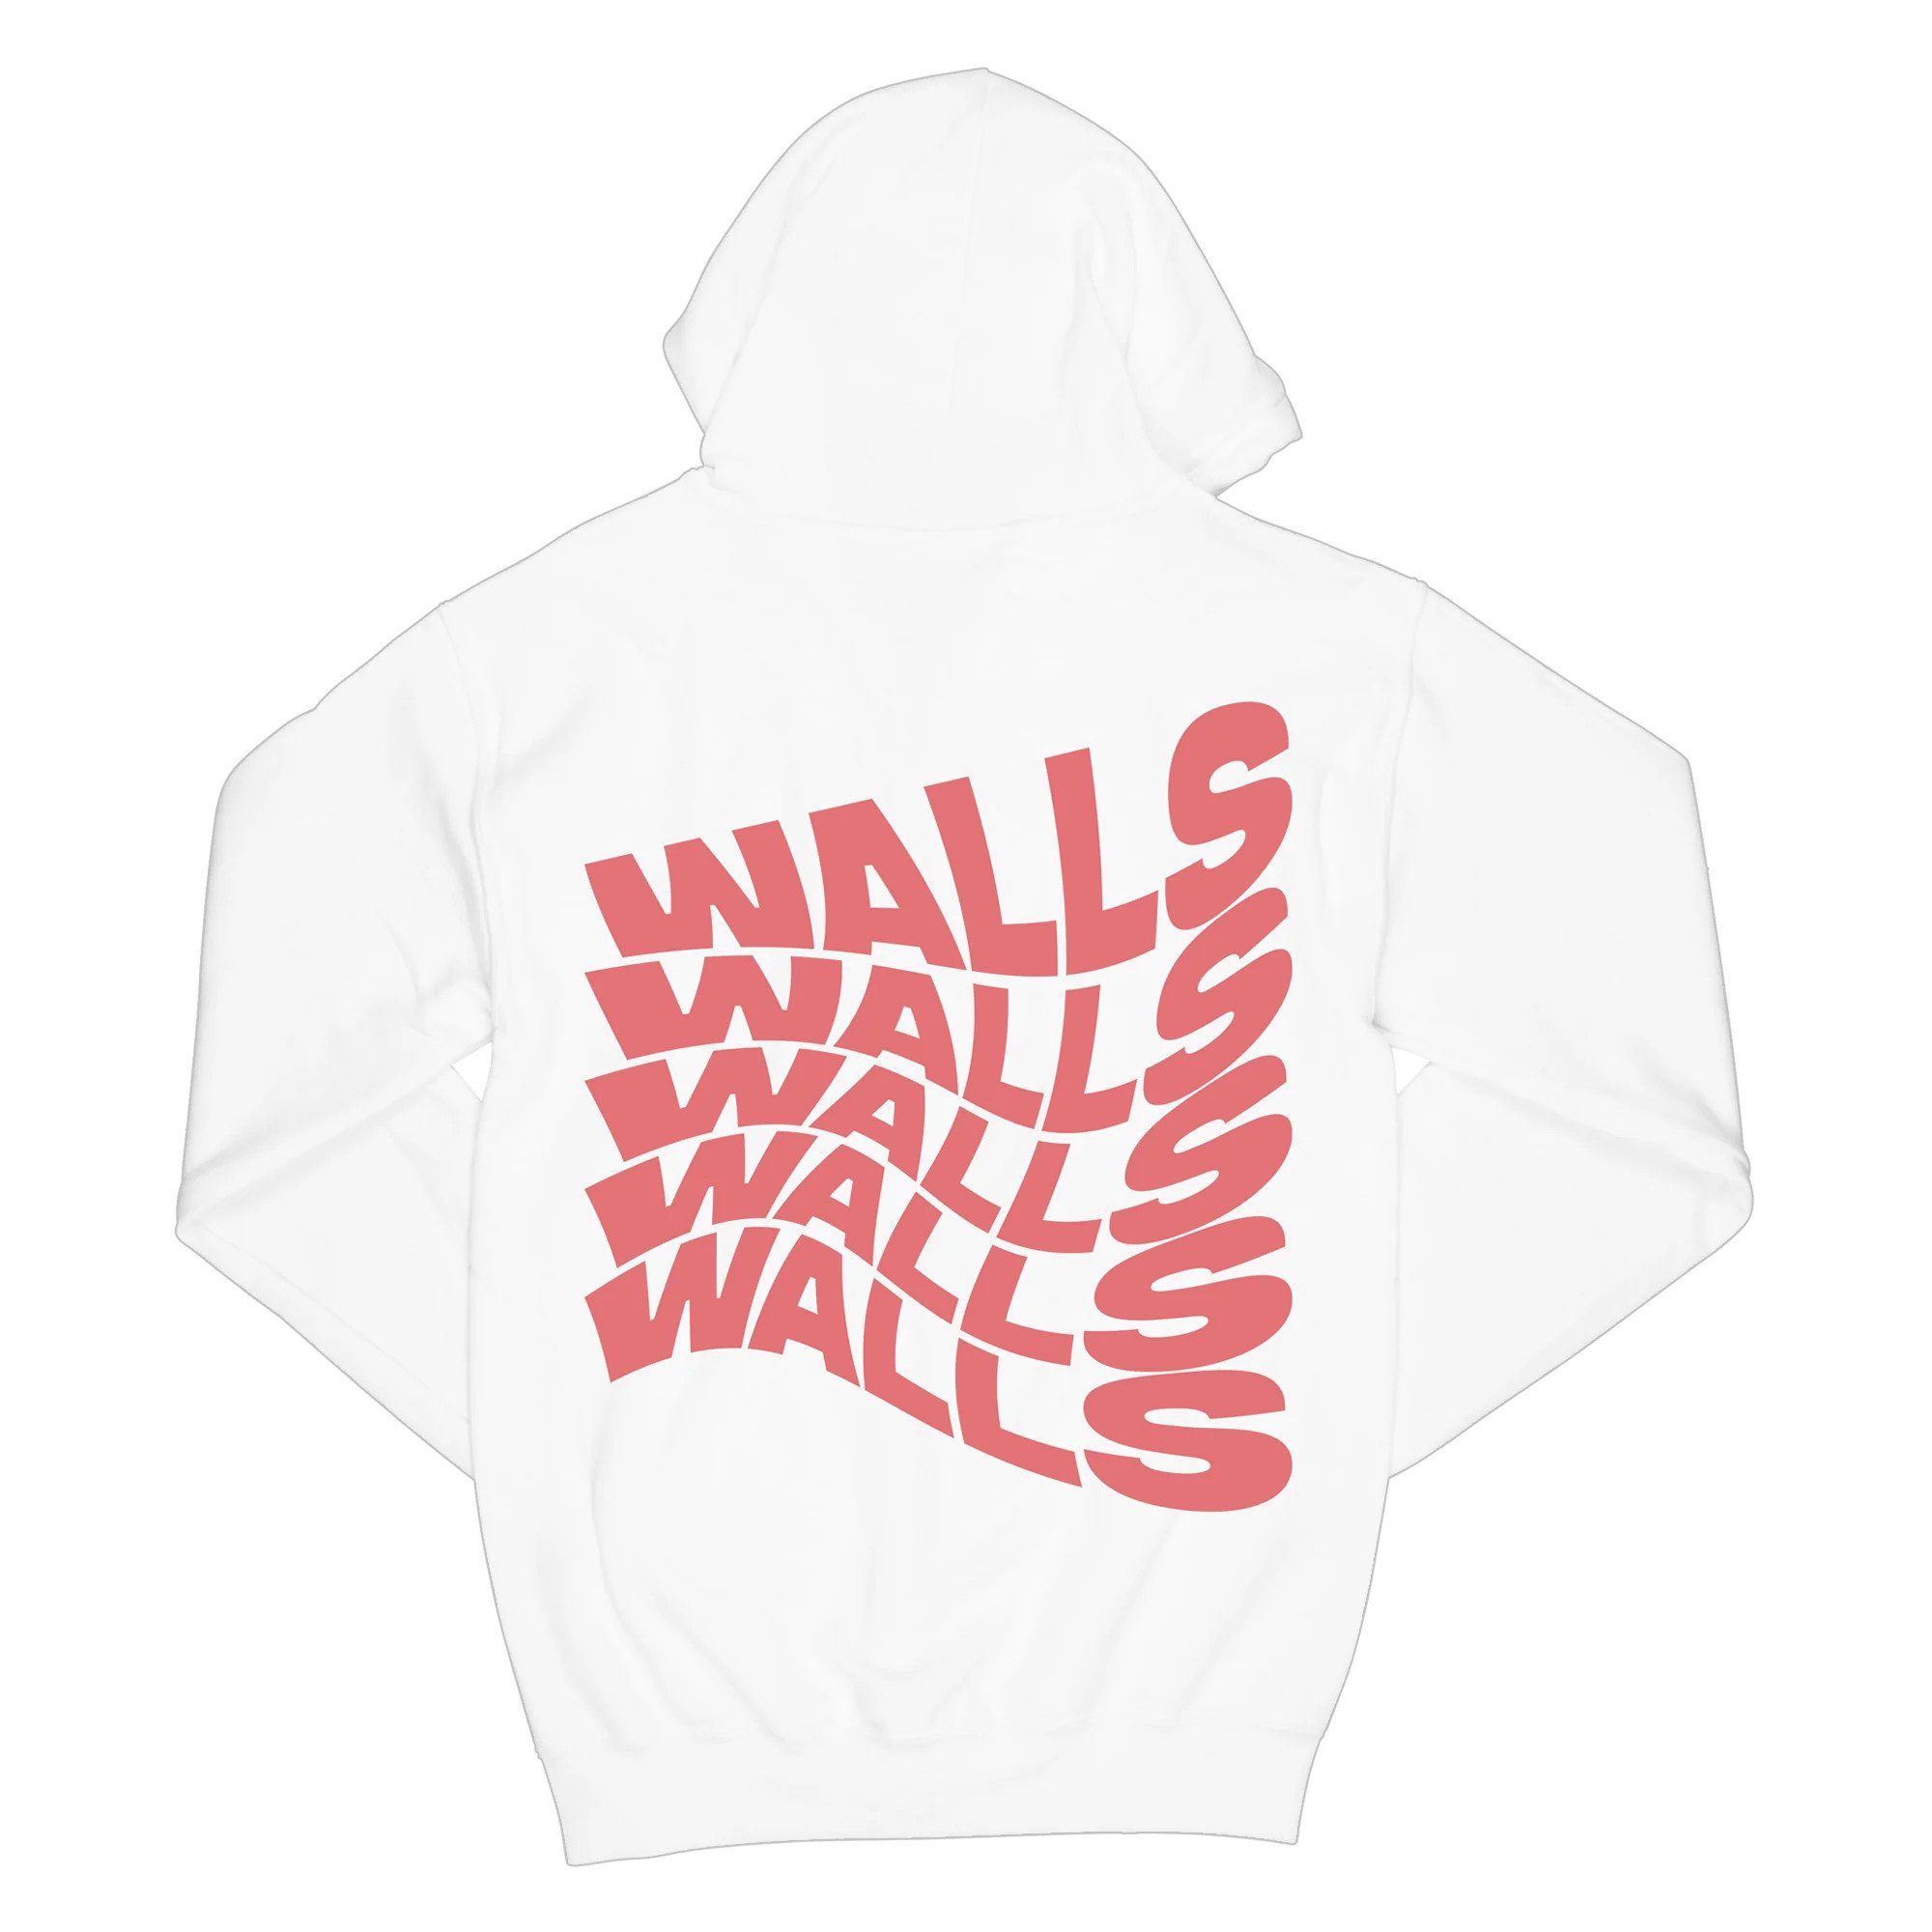 Louis tomlinson walls hoodie, Walls Album hoodie, One direction merch.